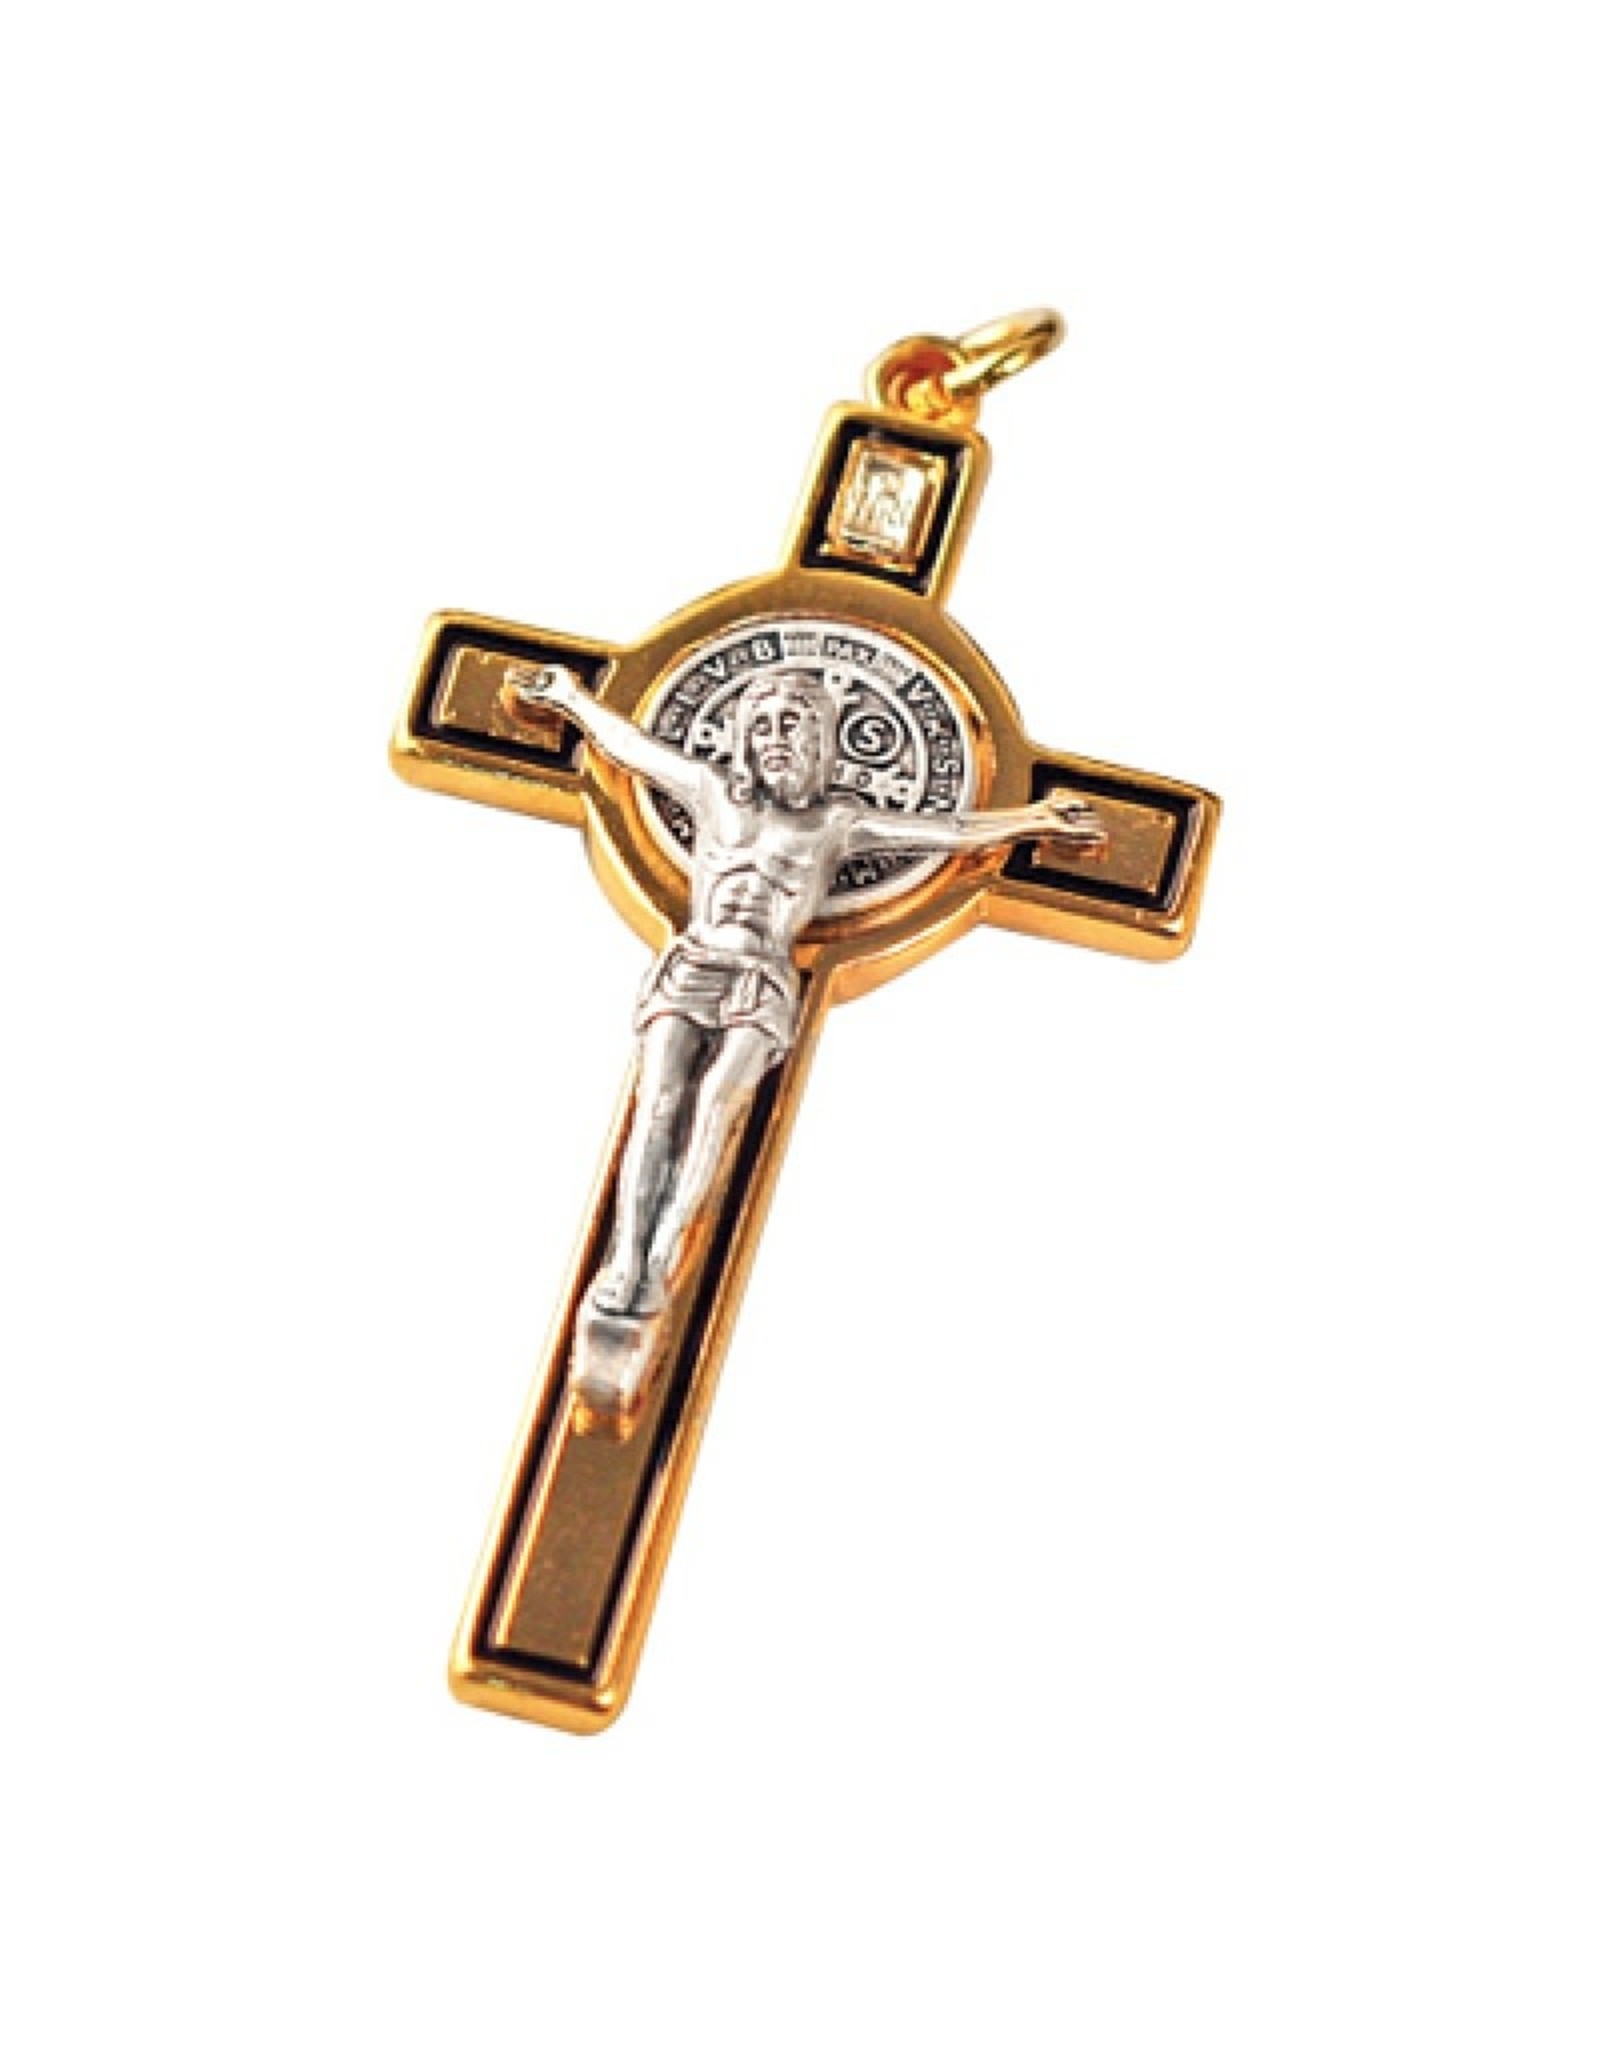 San Francis Medal Crucifix Benedictine 3" Black/Gold